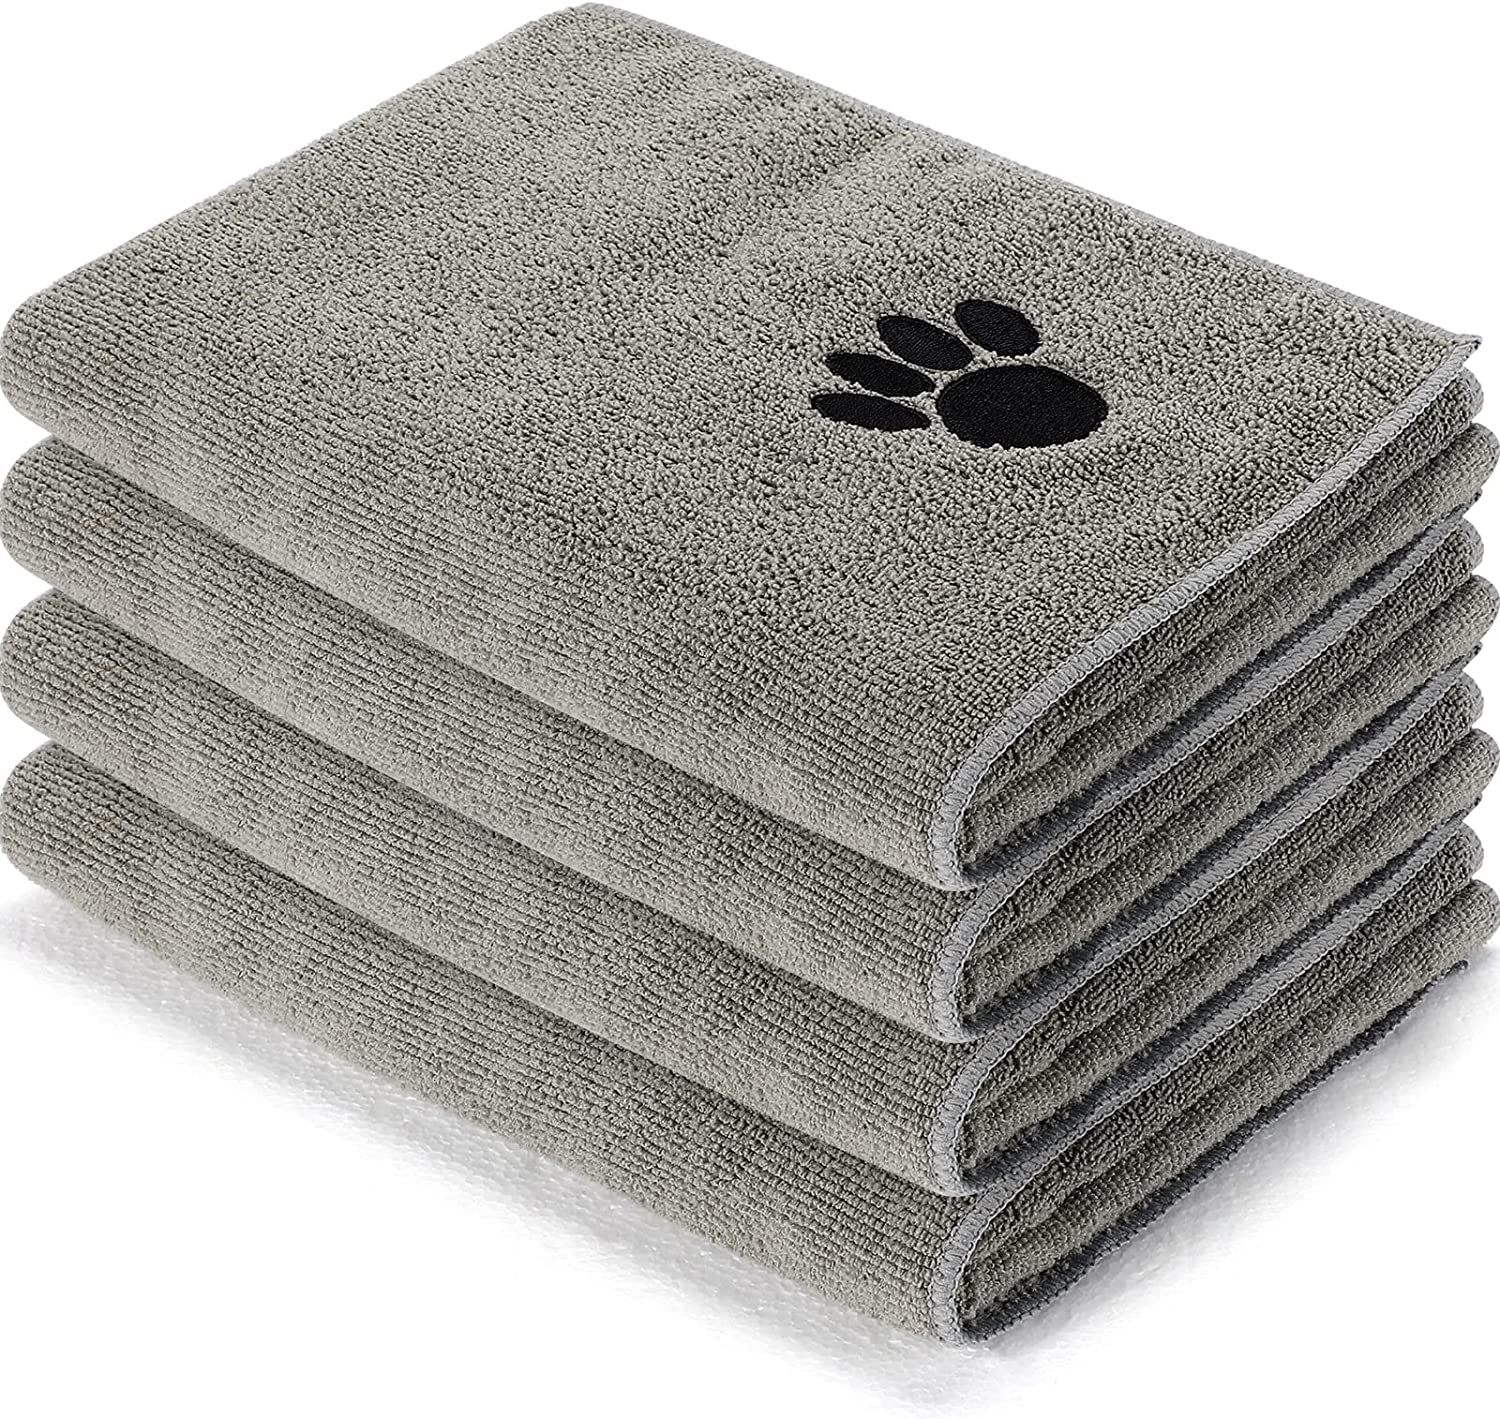 Pet grooming absorbent towel